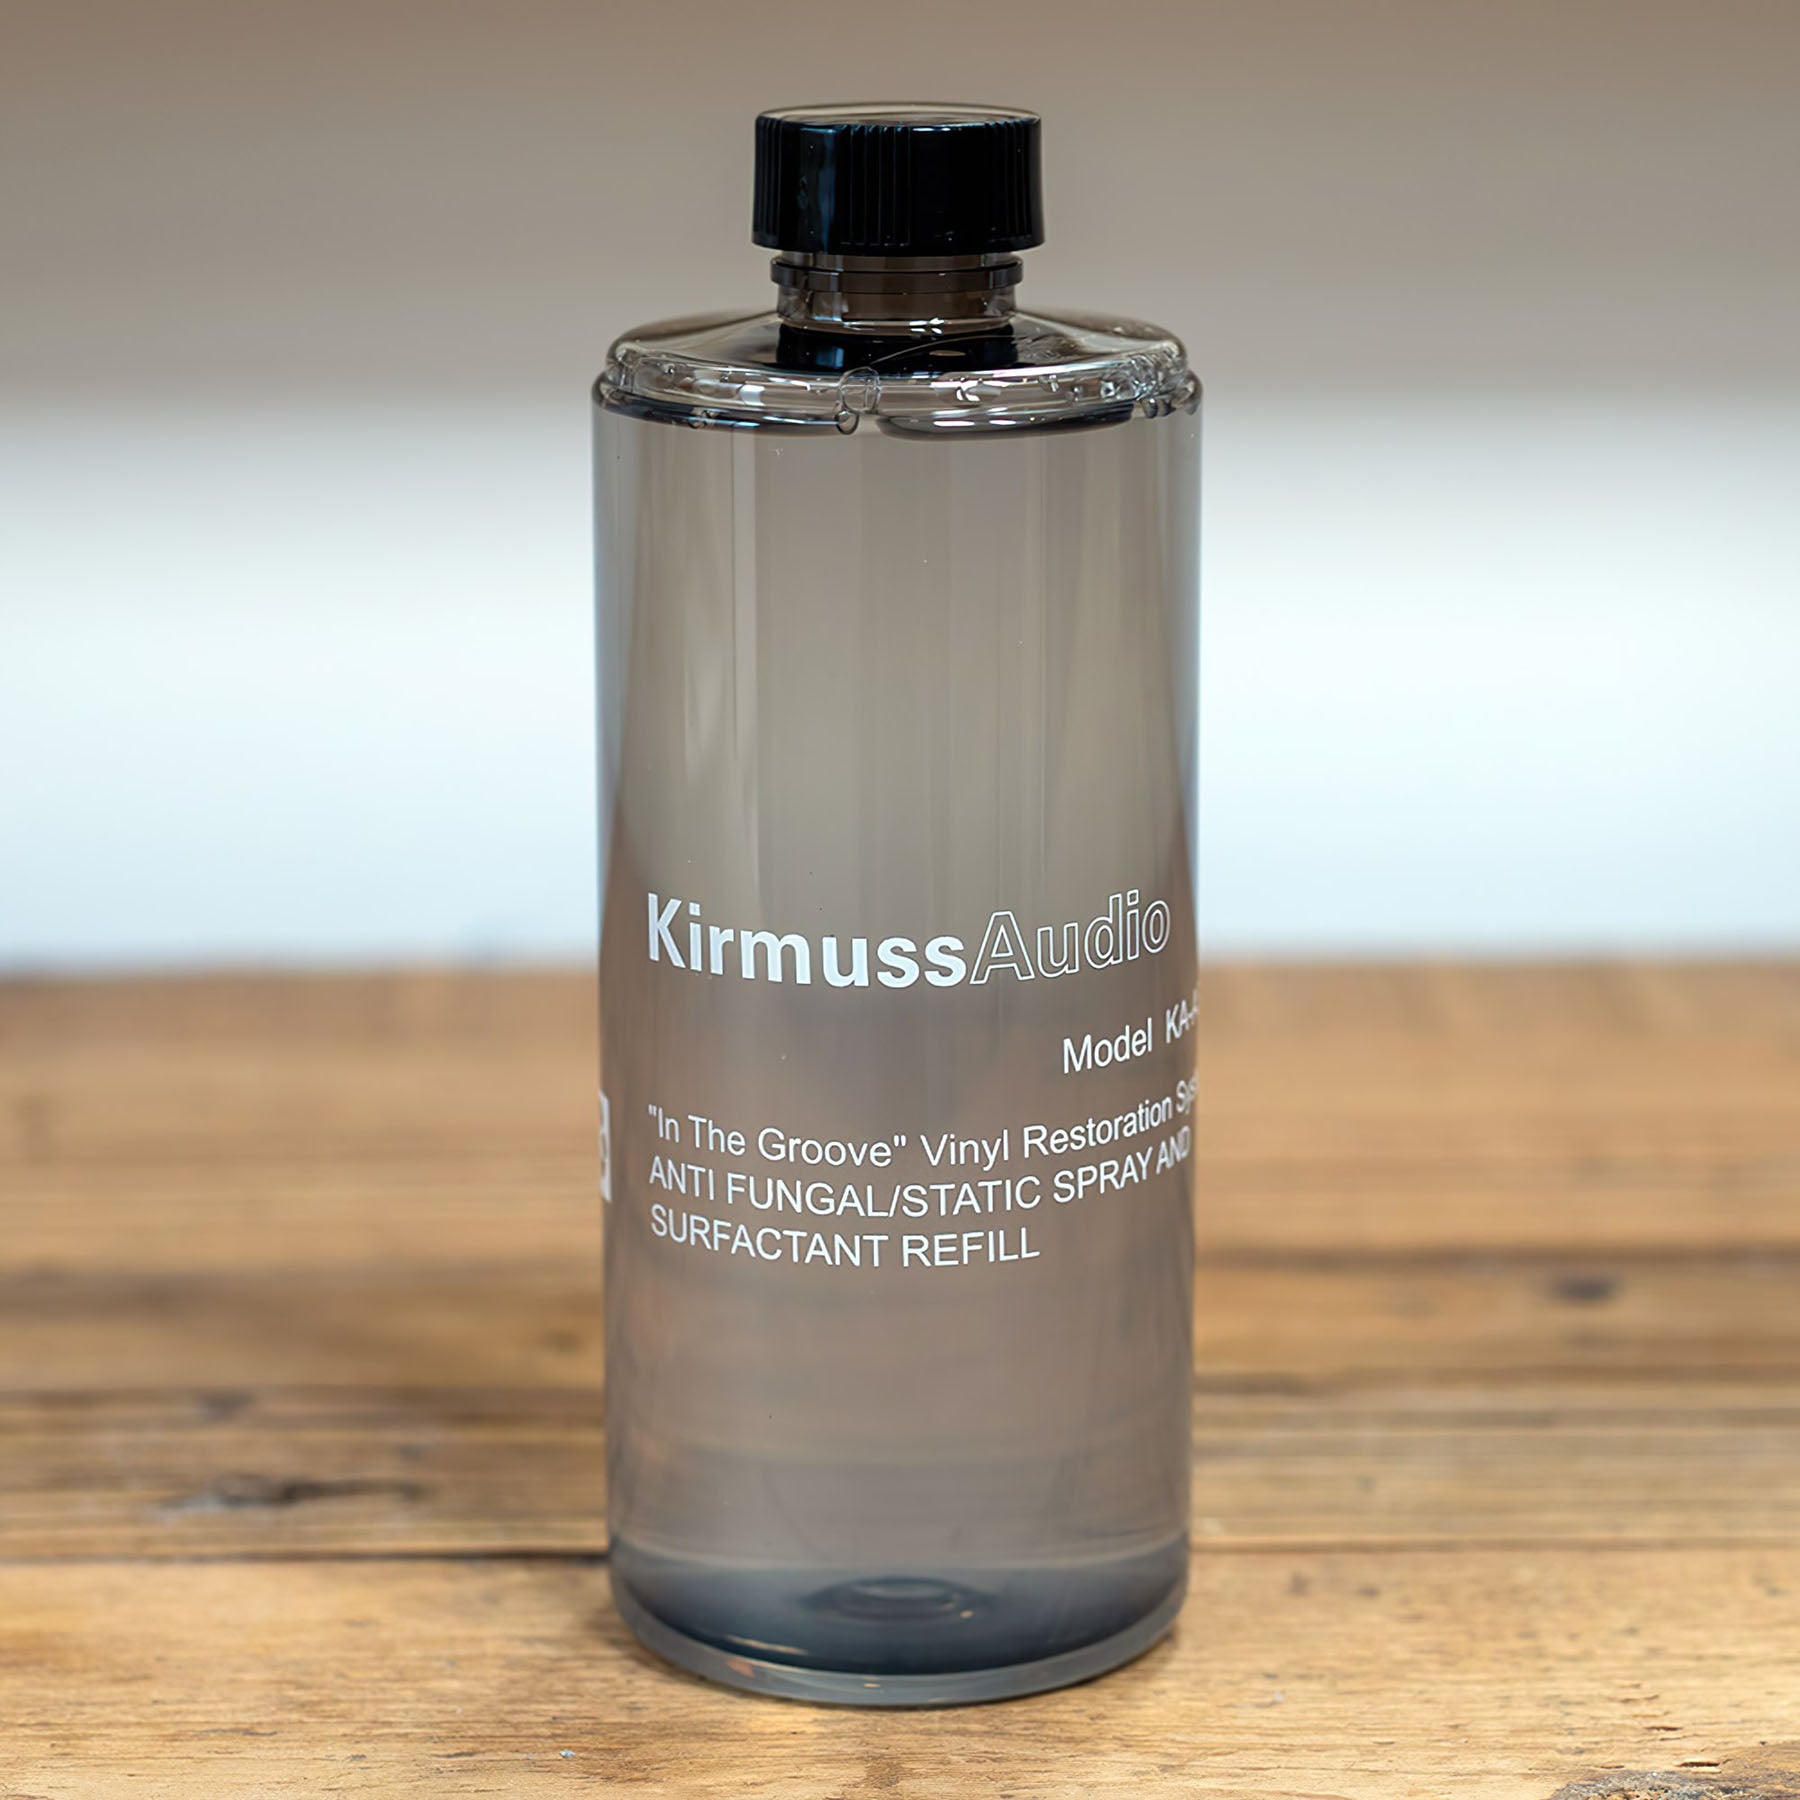 Kirmuss Audio KA-AS1-R1 300ml Kirmuss Audio Bottle of Surfactant Solution Refill